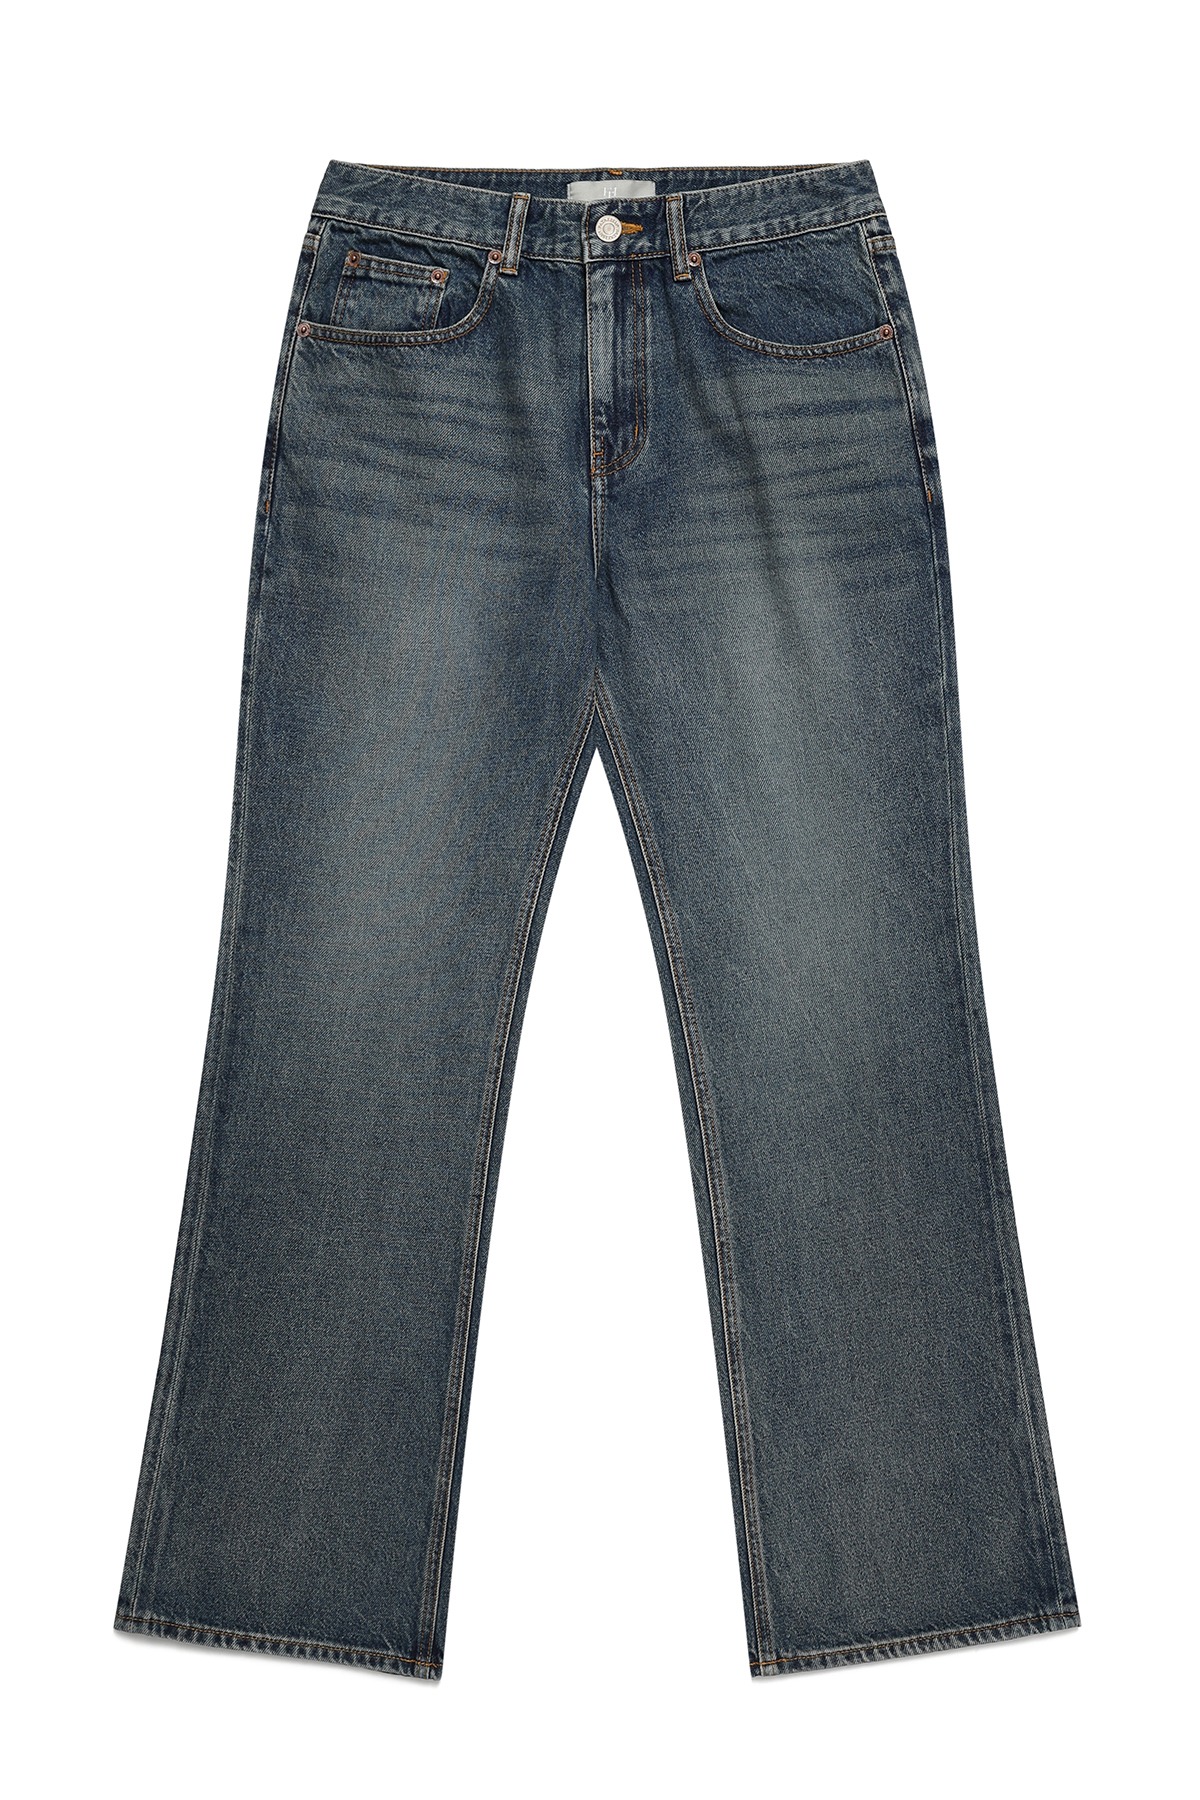 #0311 Vintage washed semi flare jeans